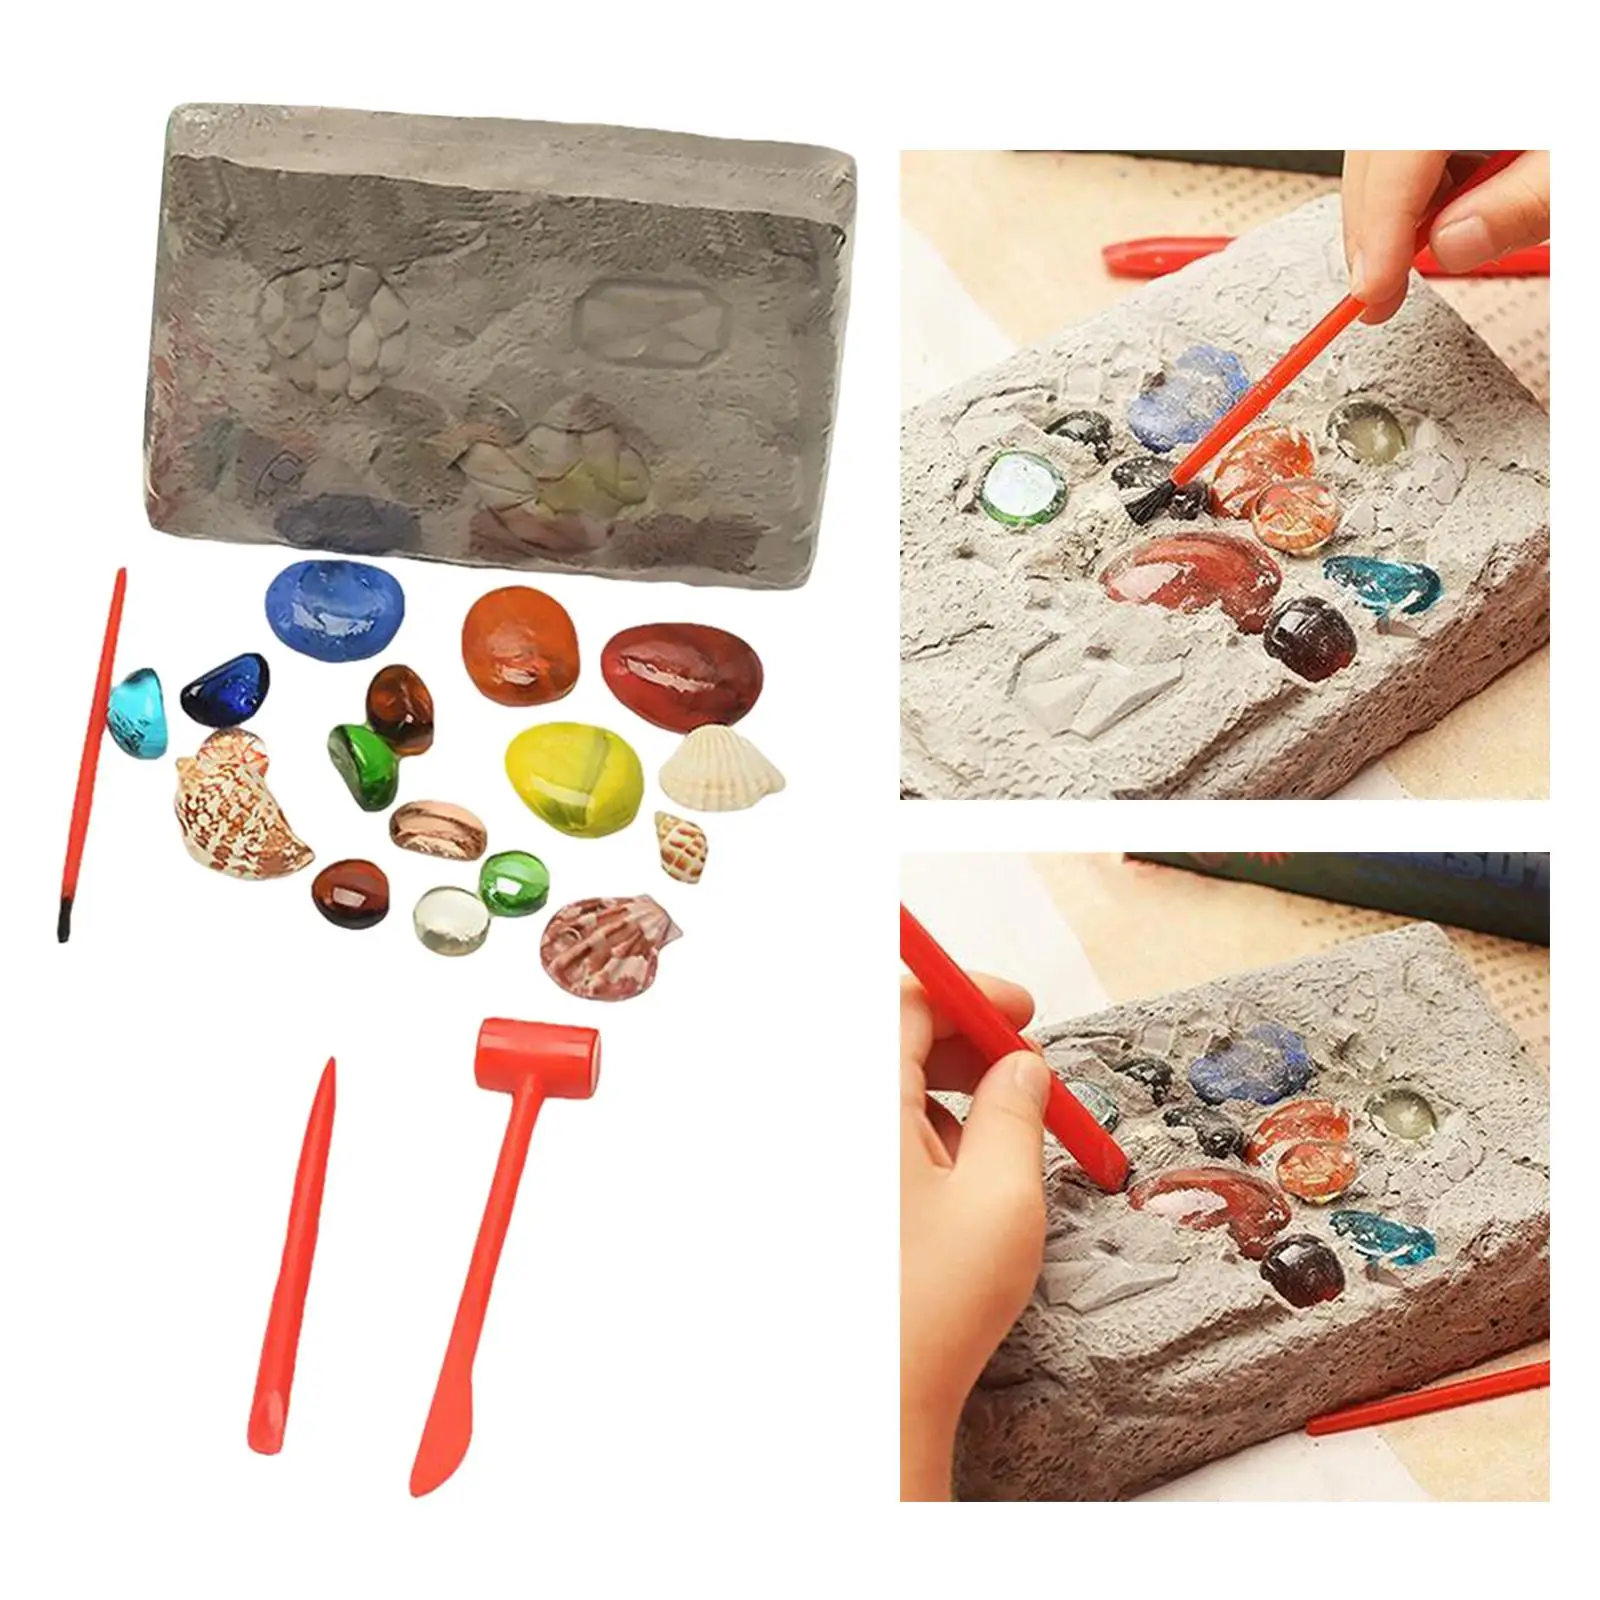 Dren great science gemology gift kids rocks gem excavation toys funnynyny game for boys thumb200